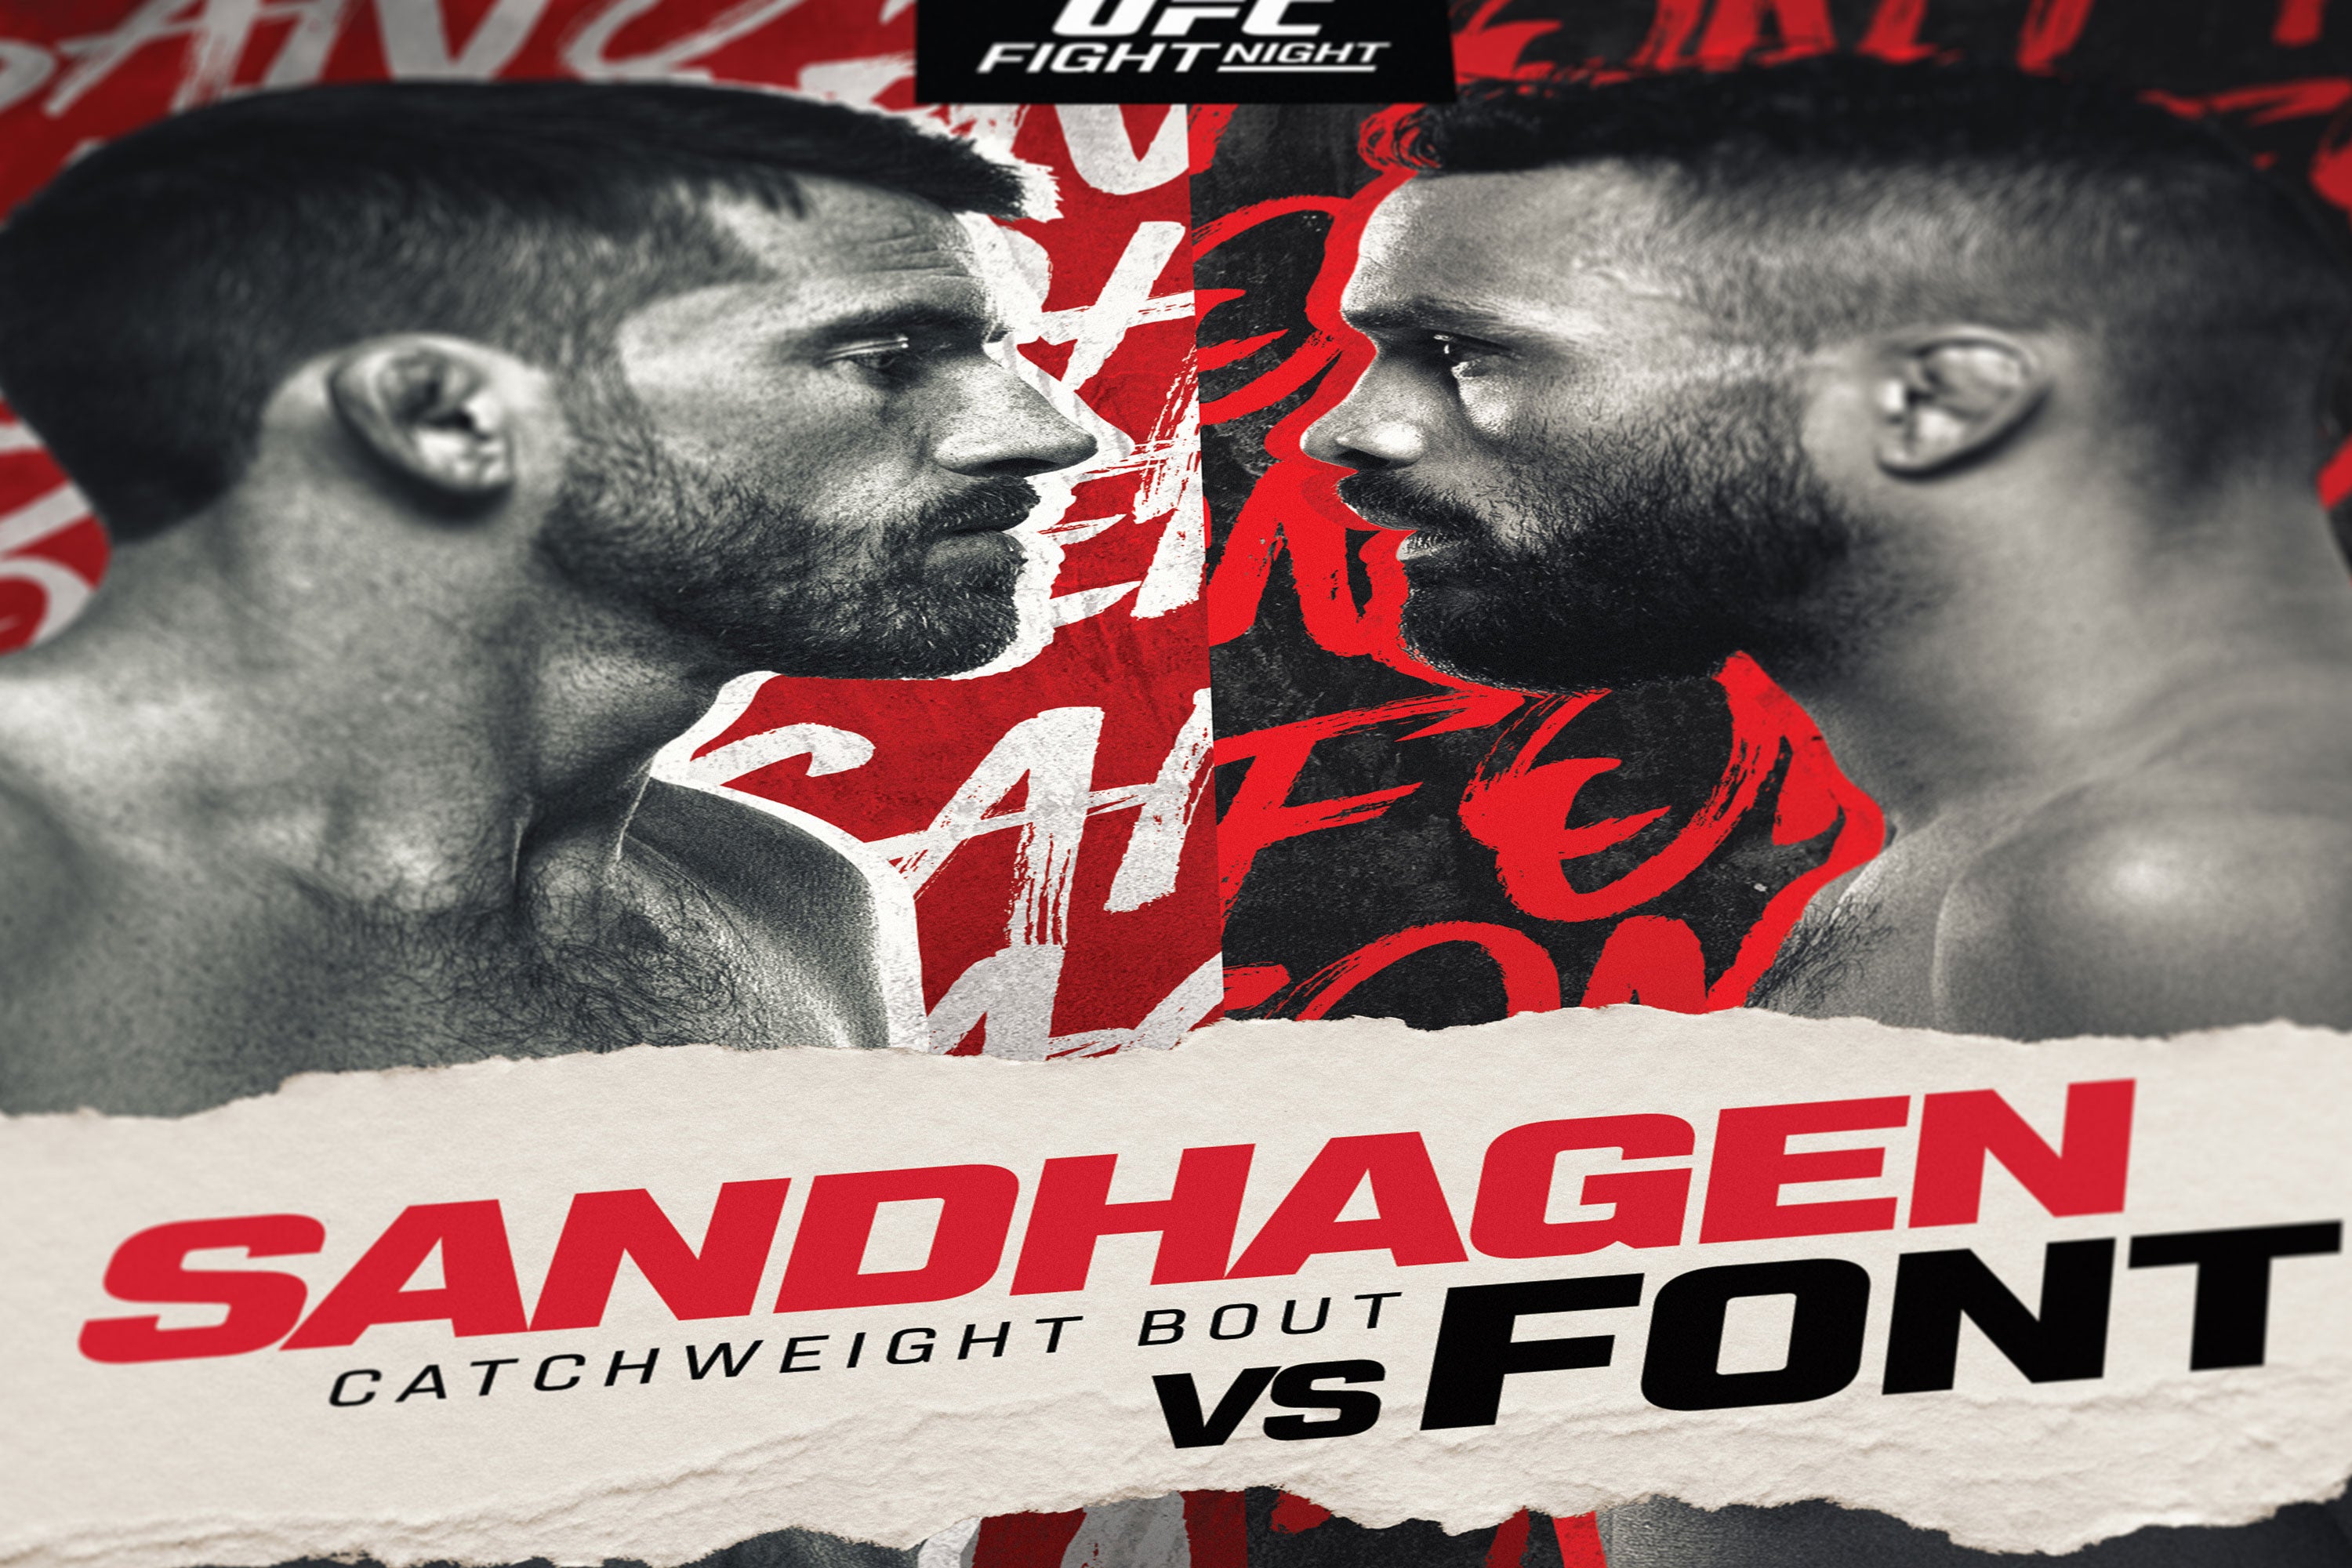 UFC Fight Night: Sandhagen vs Font Autographed Event Poster